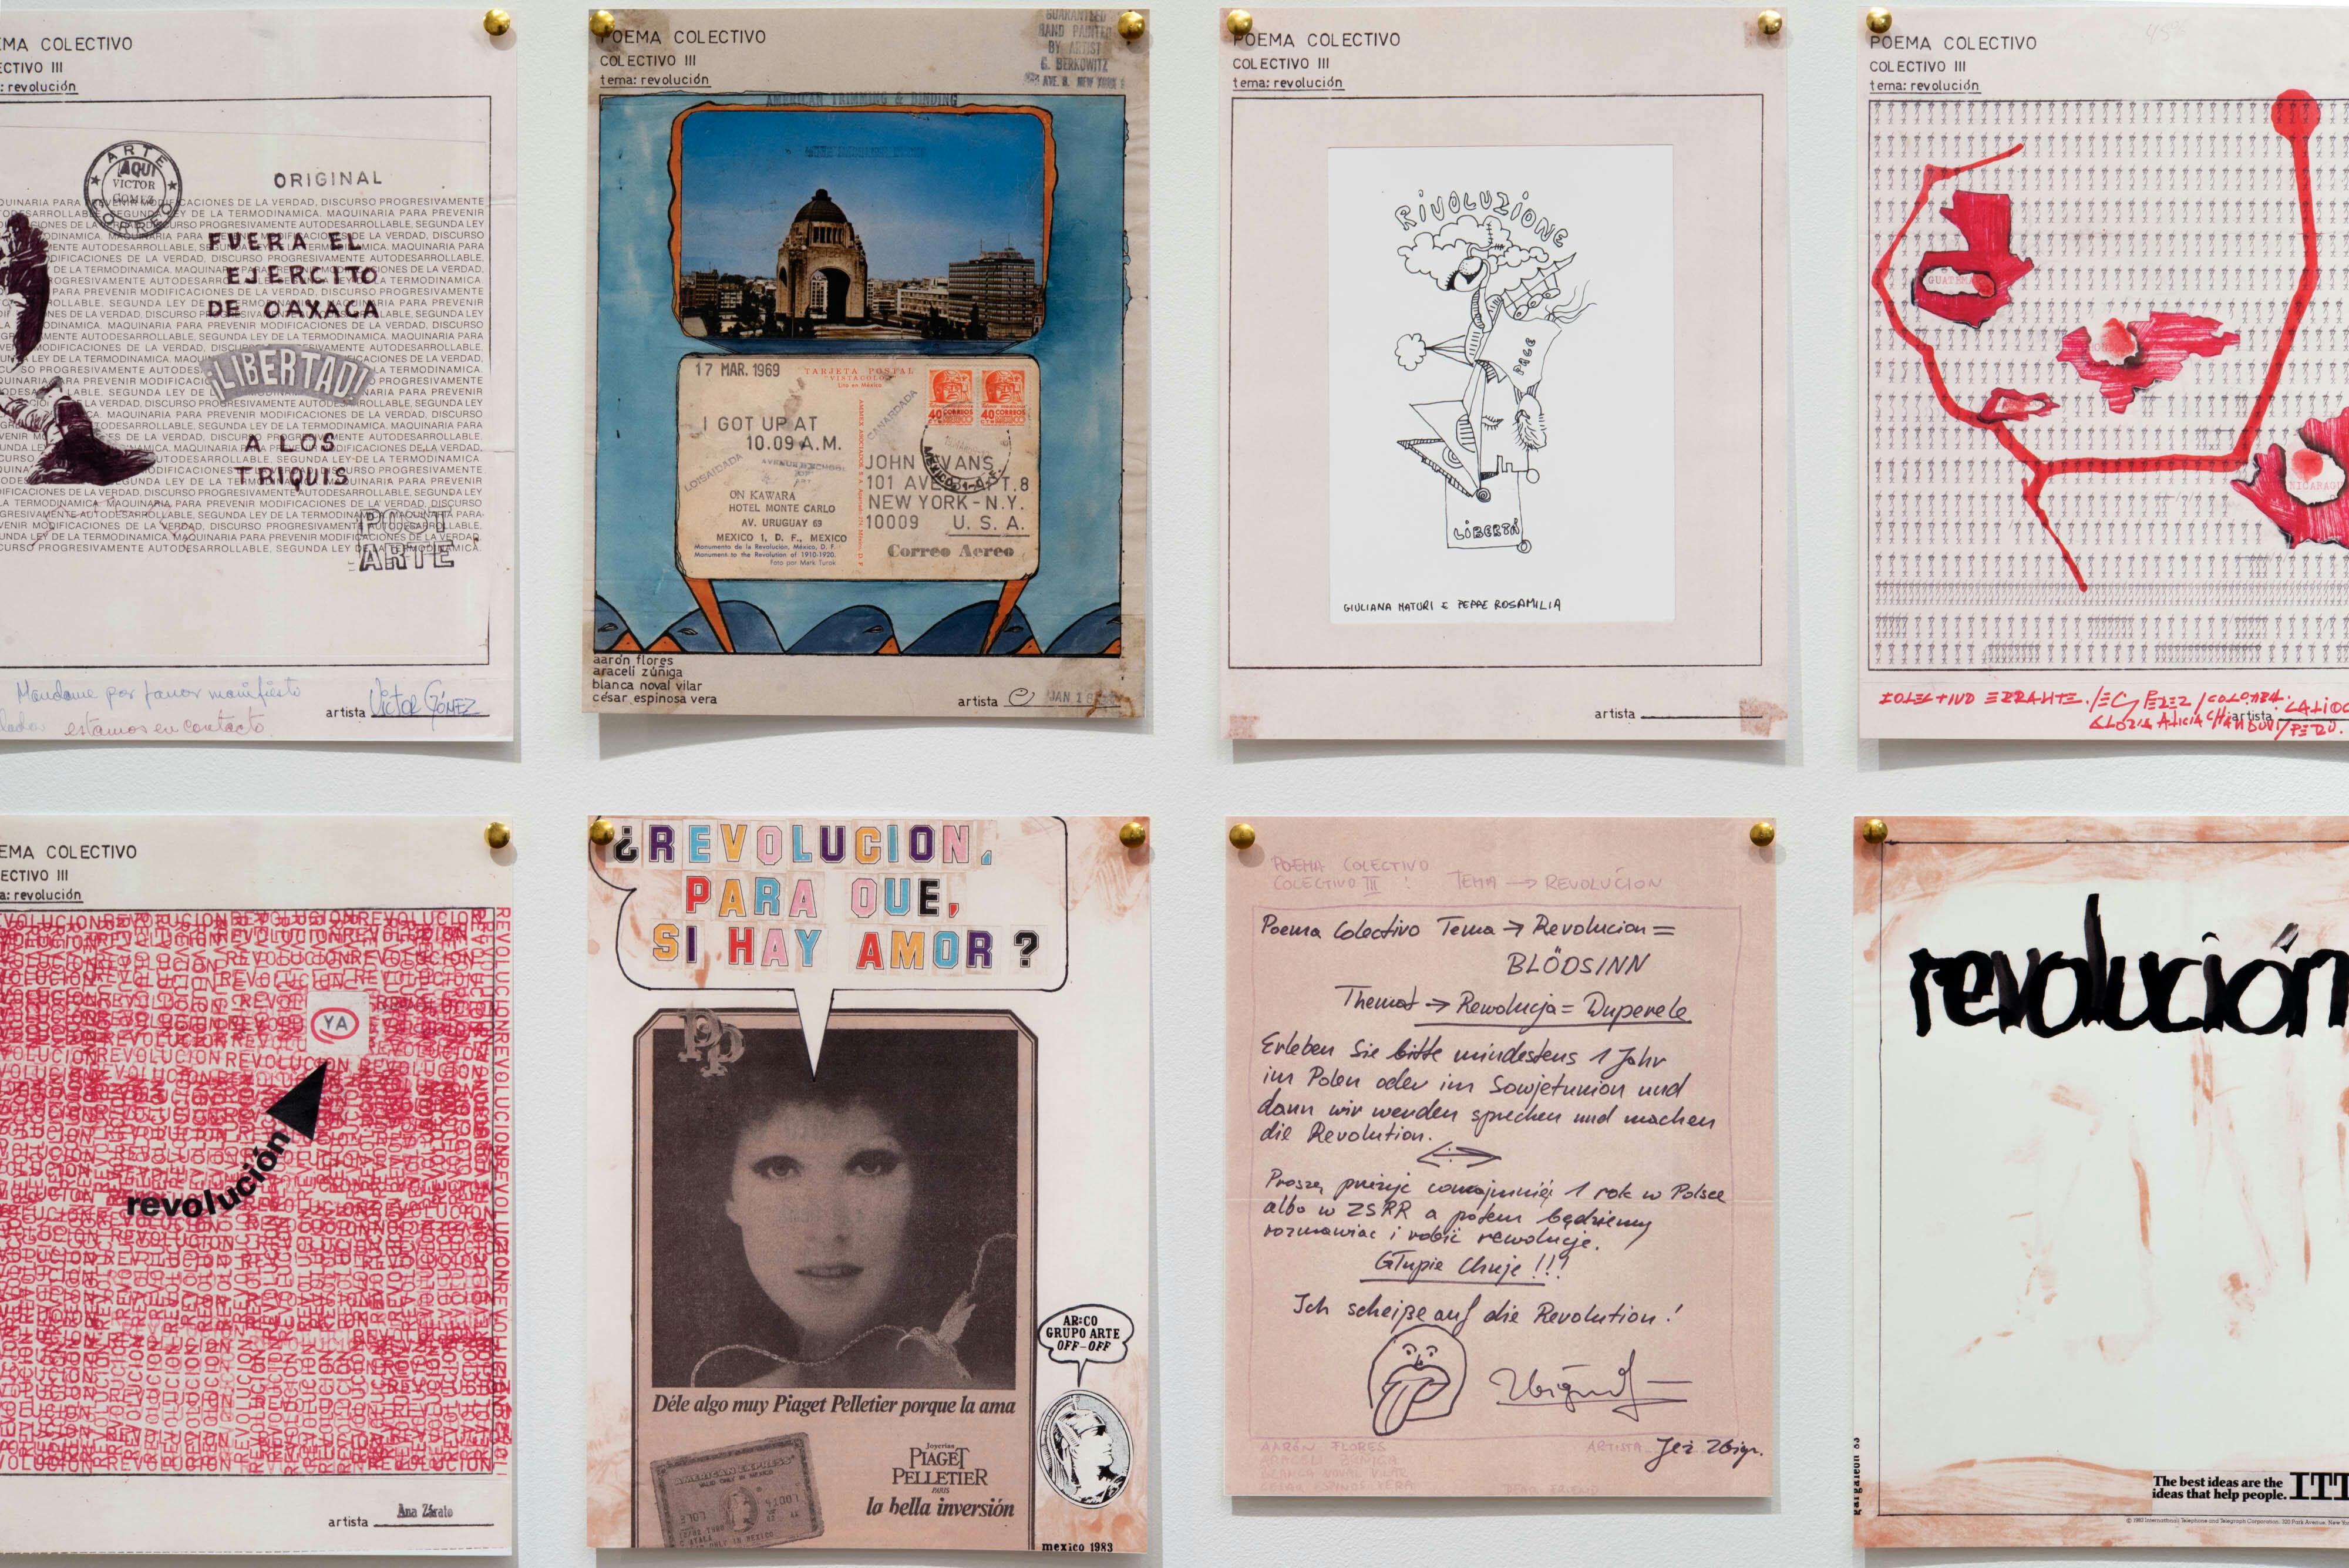 Close up view of collages in Poema Colectivo Revolución exhibition.